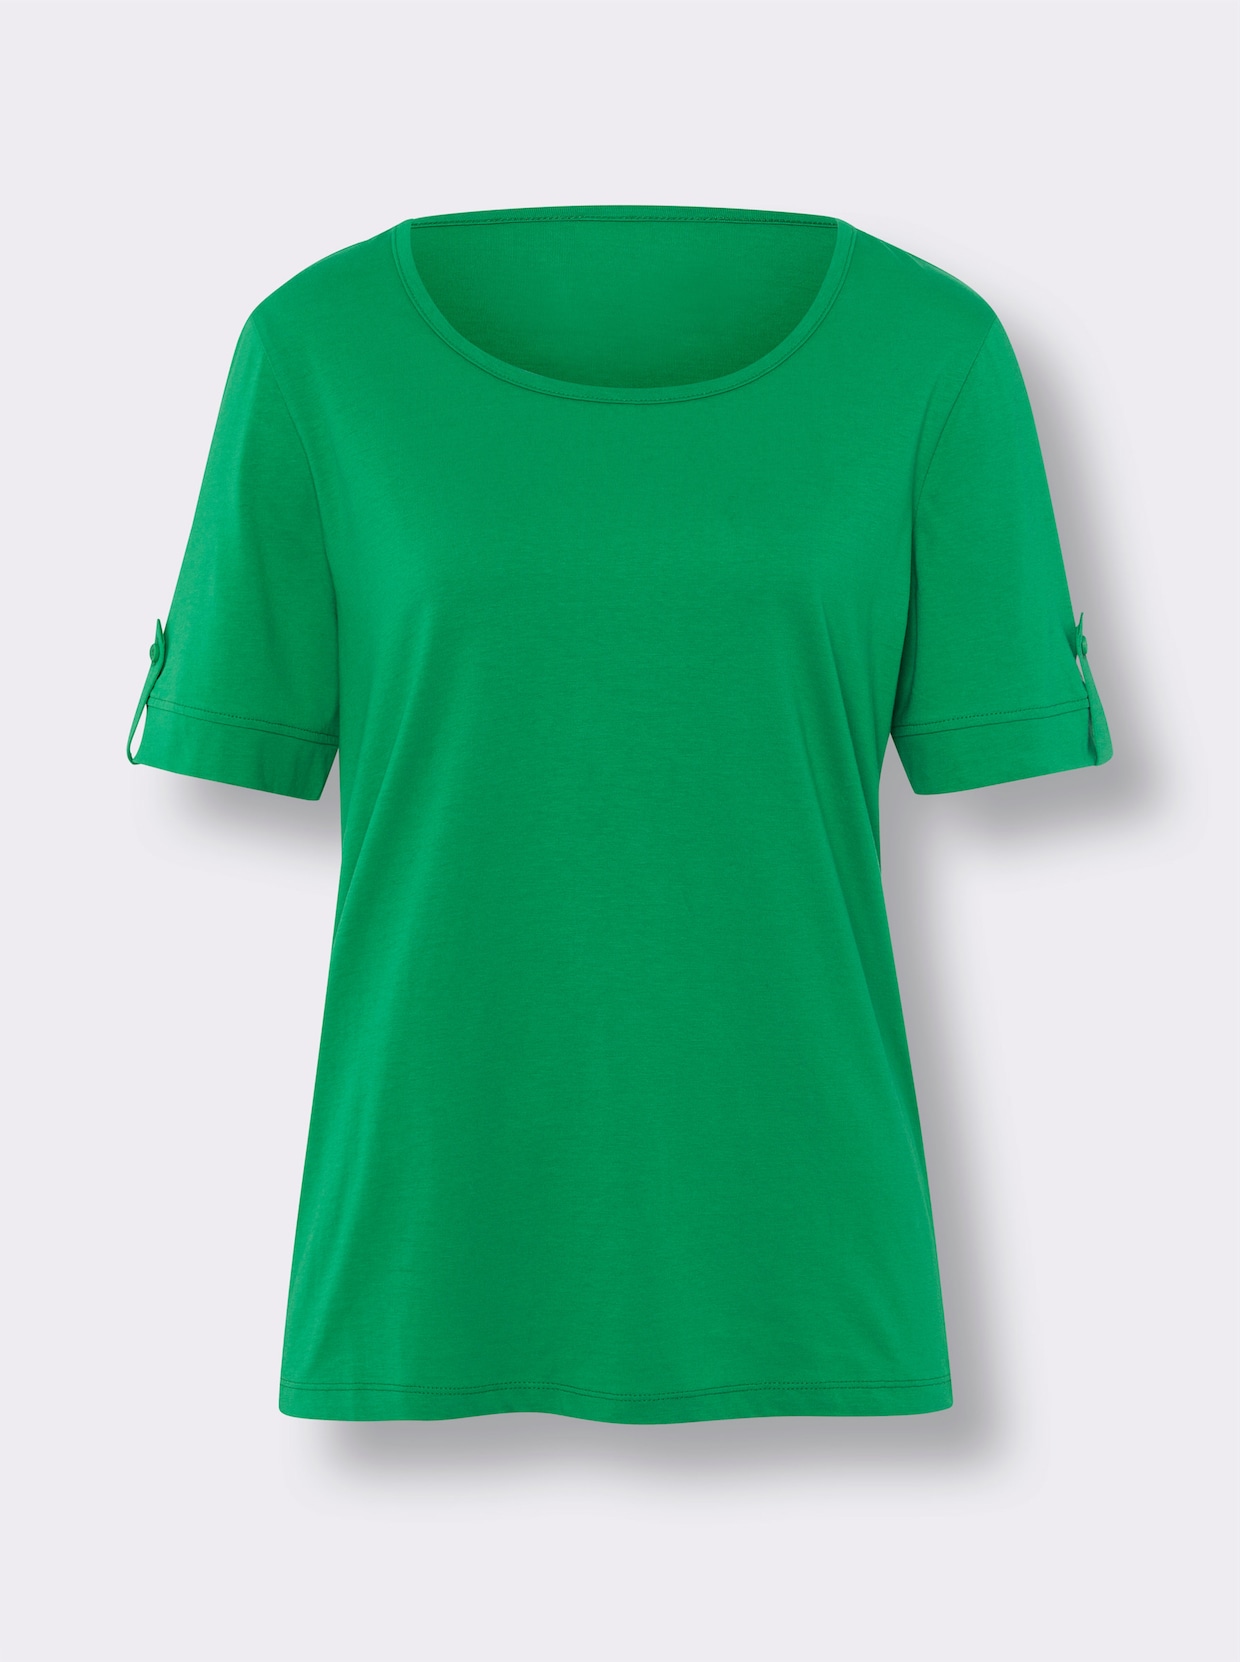 Doppelpack Shirts - grasgrün + ecru-grasgrün-geringelt